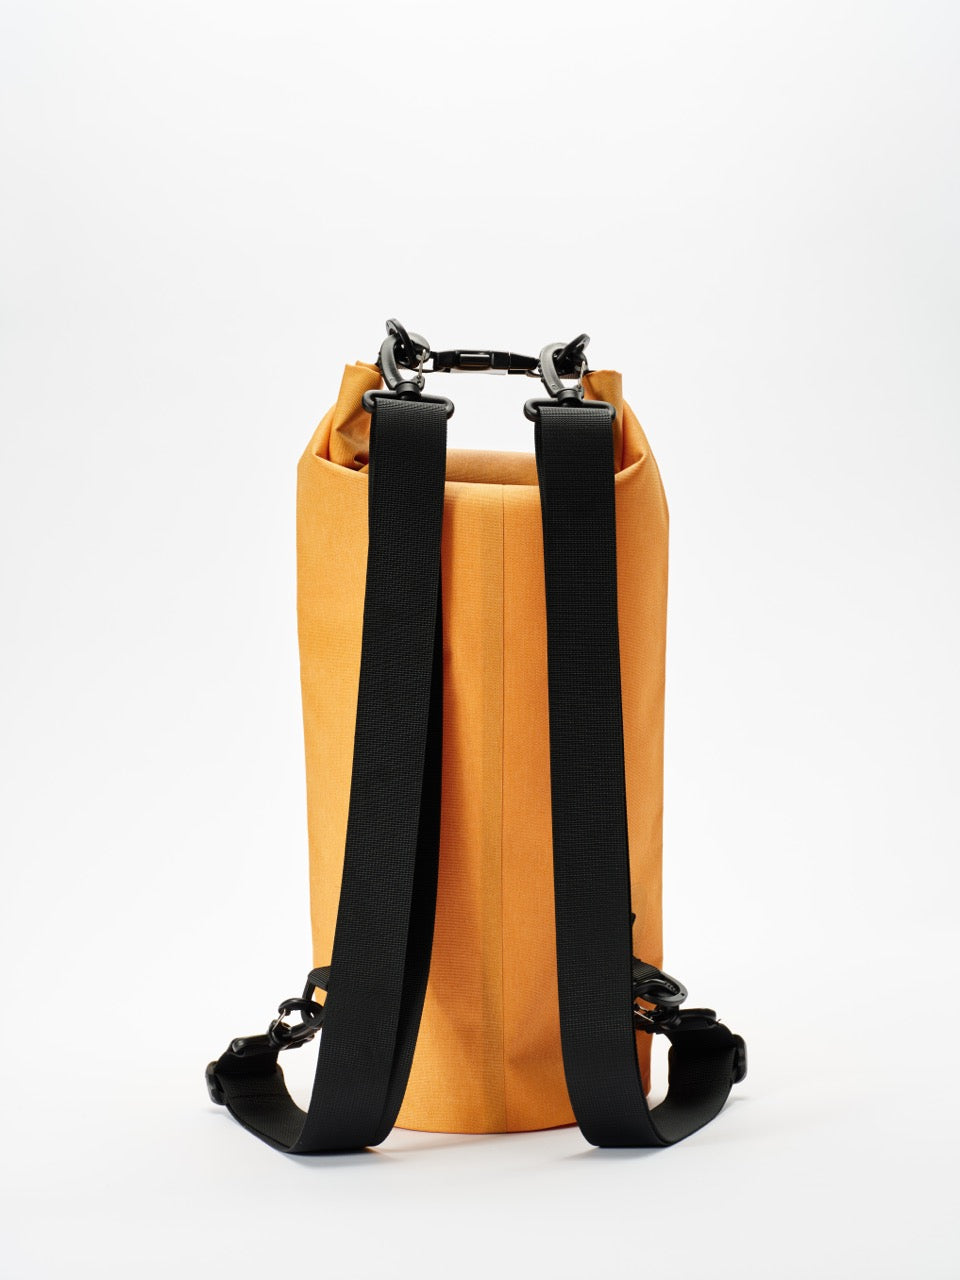 Paddle Paddle - 15 Liter Dry Bag - Sunset Yellow